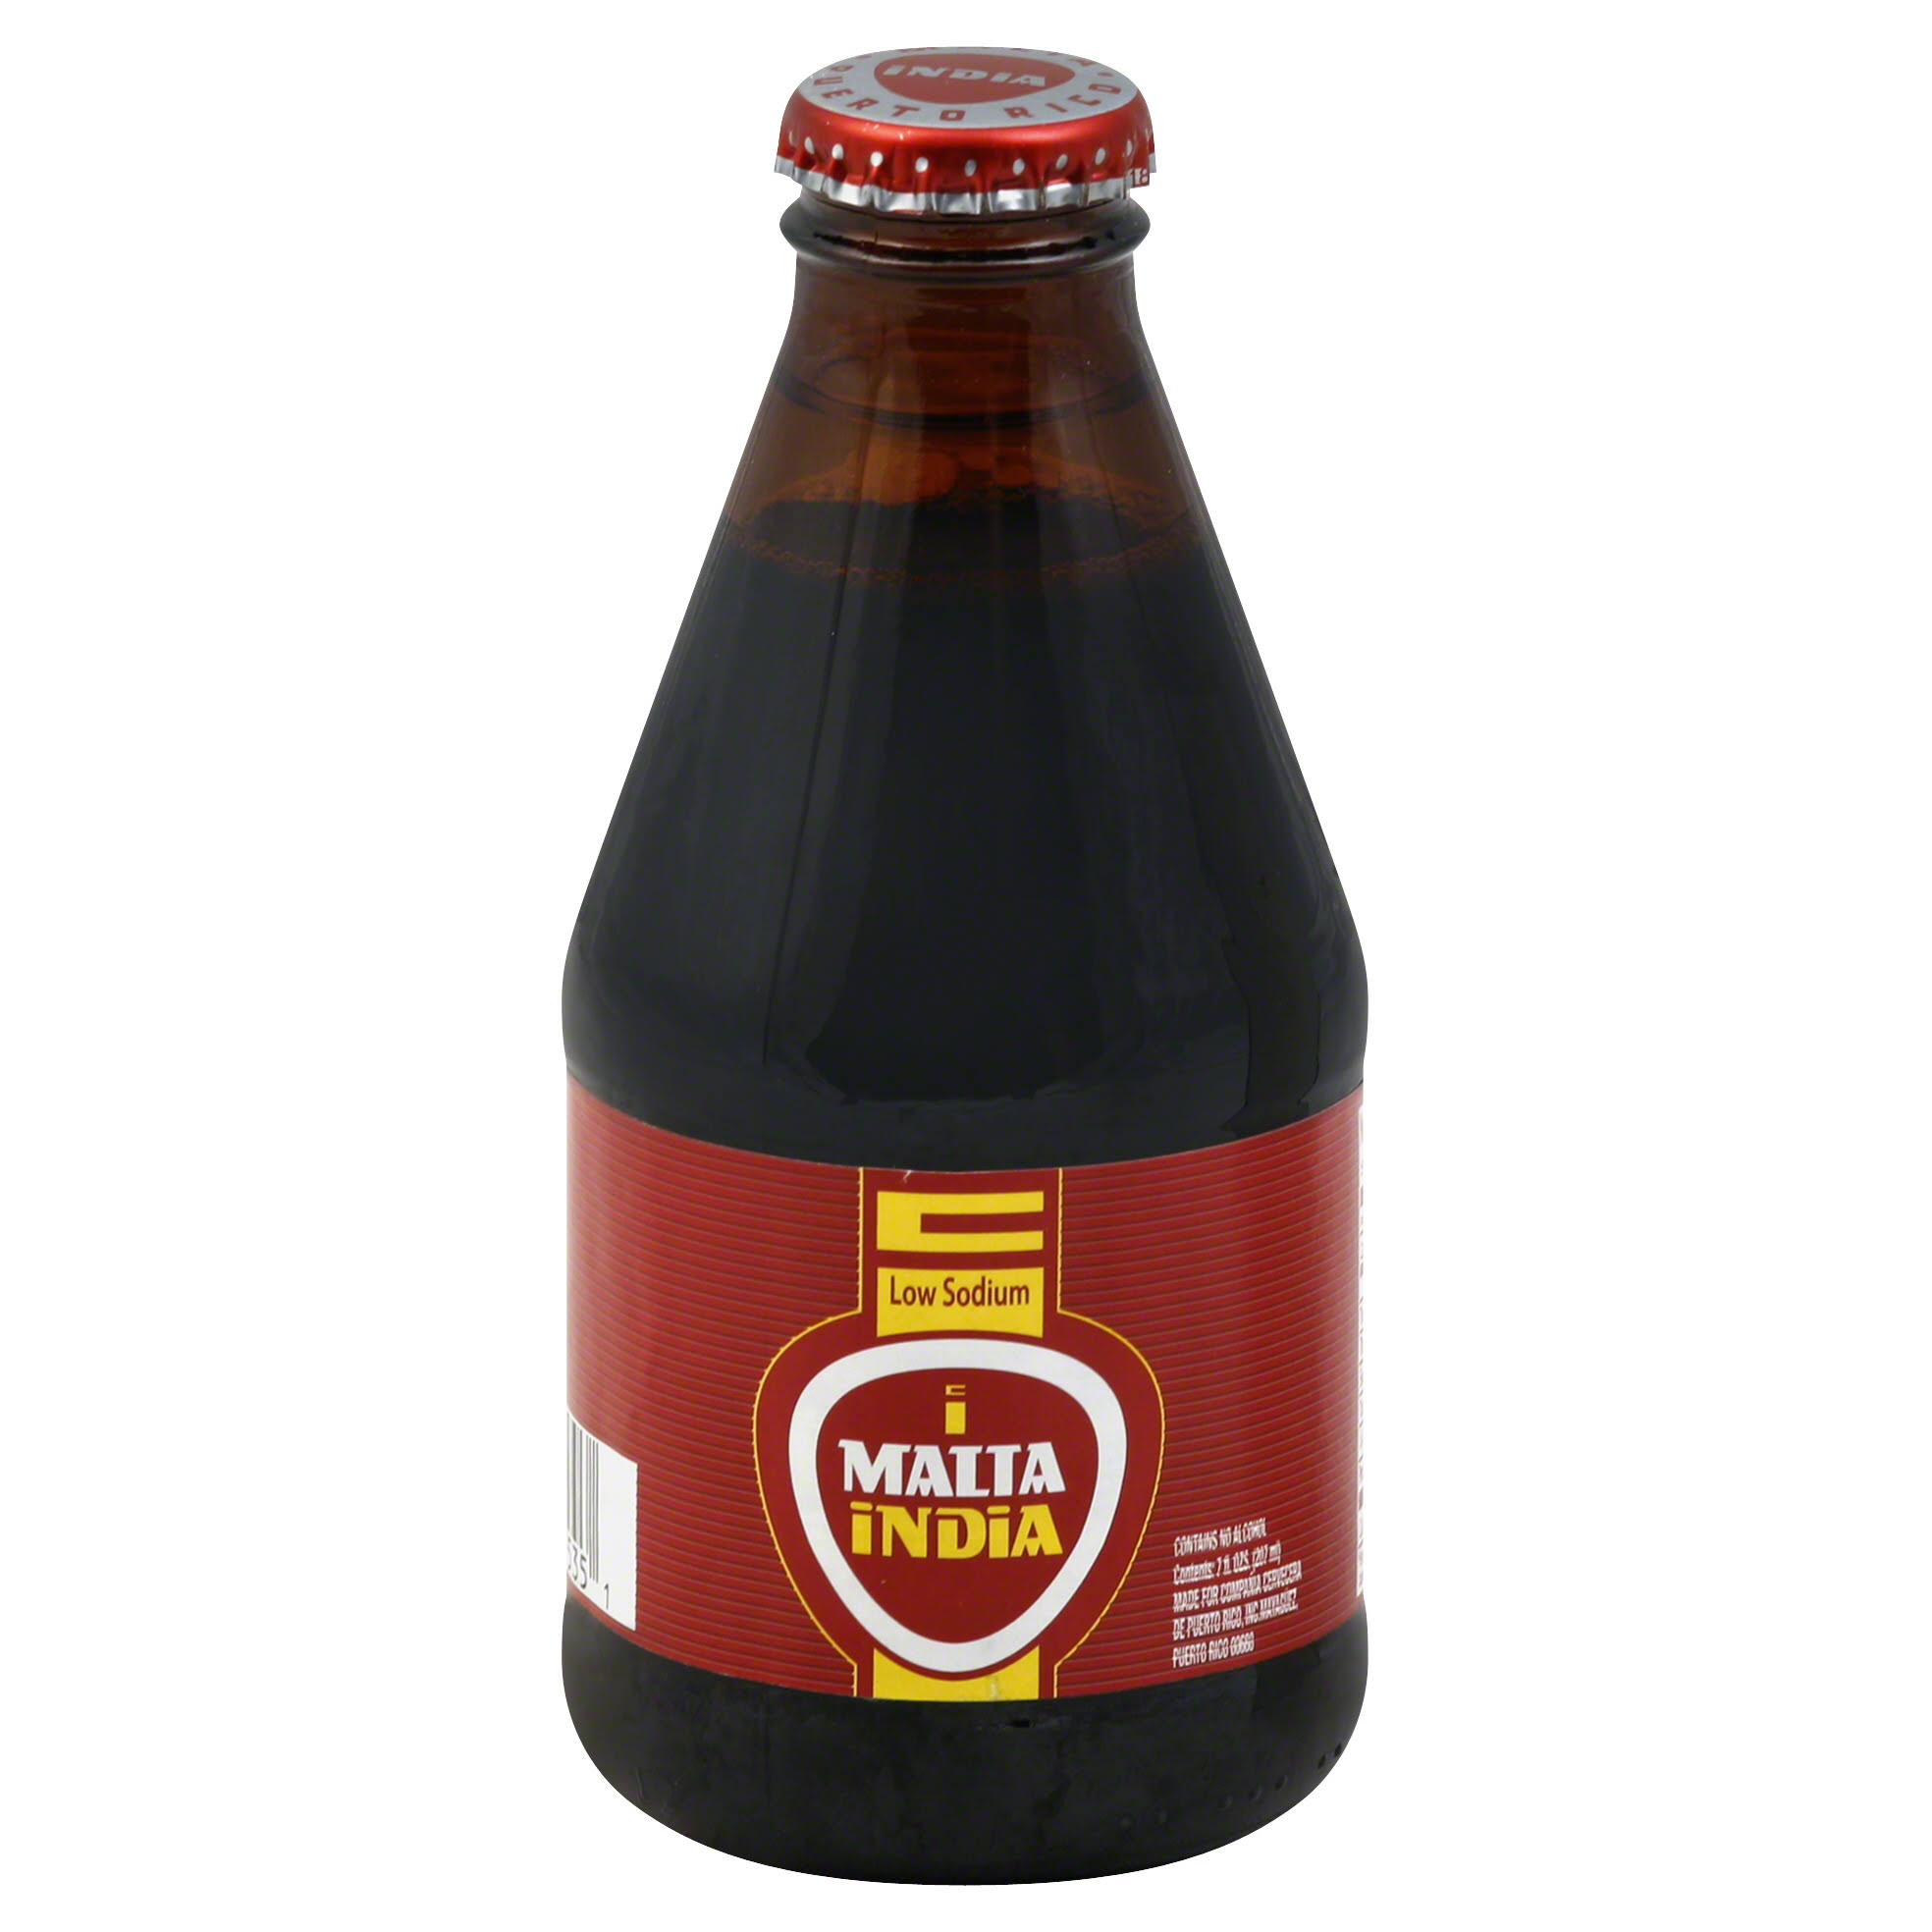 Malta India Malt Beverage, Non-Alcoholic - 7 fl oz